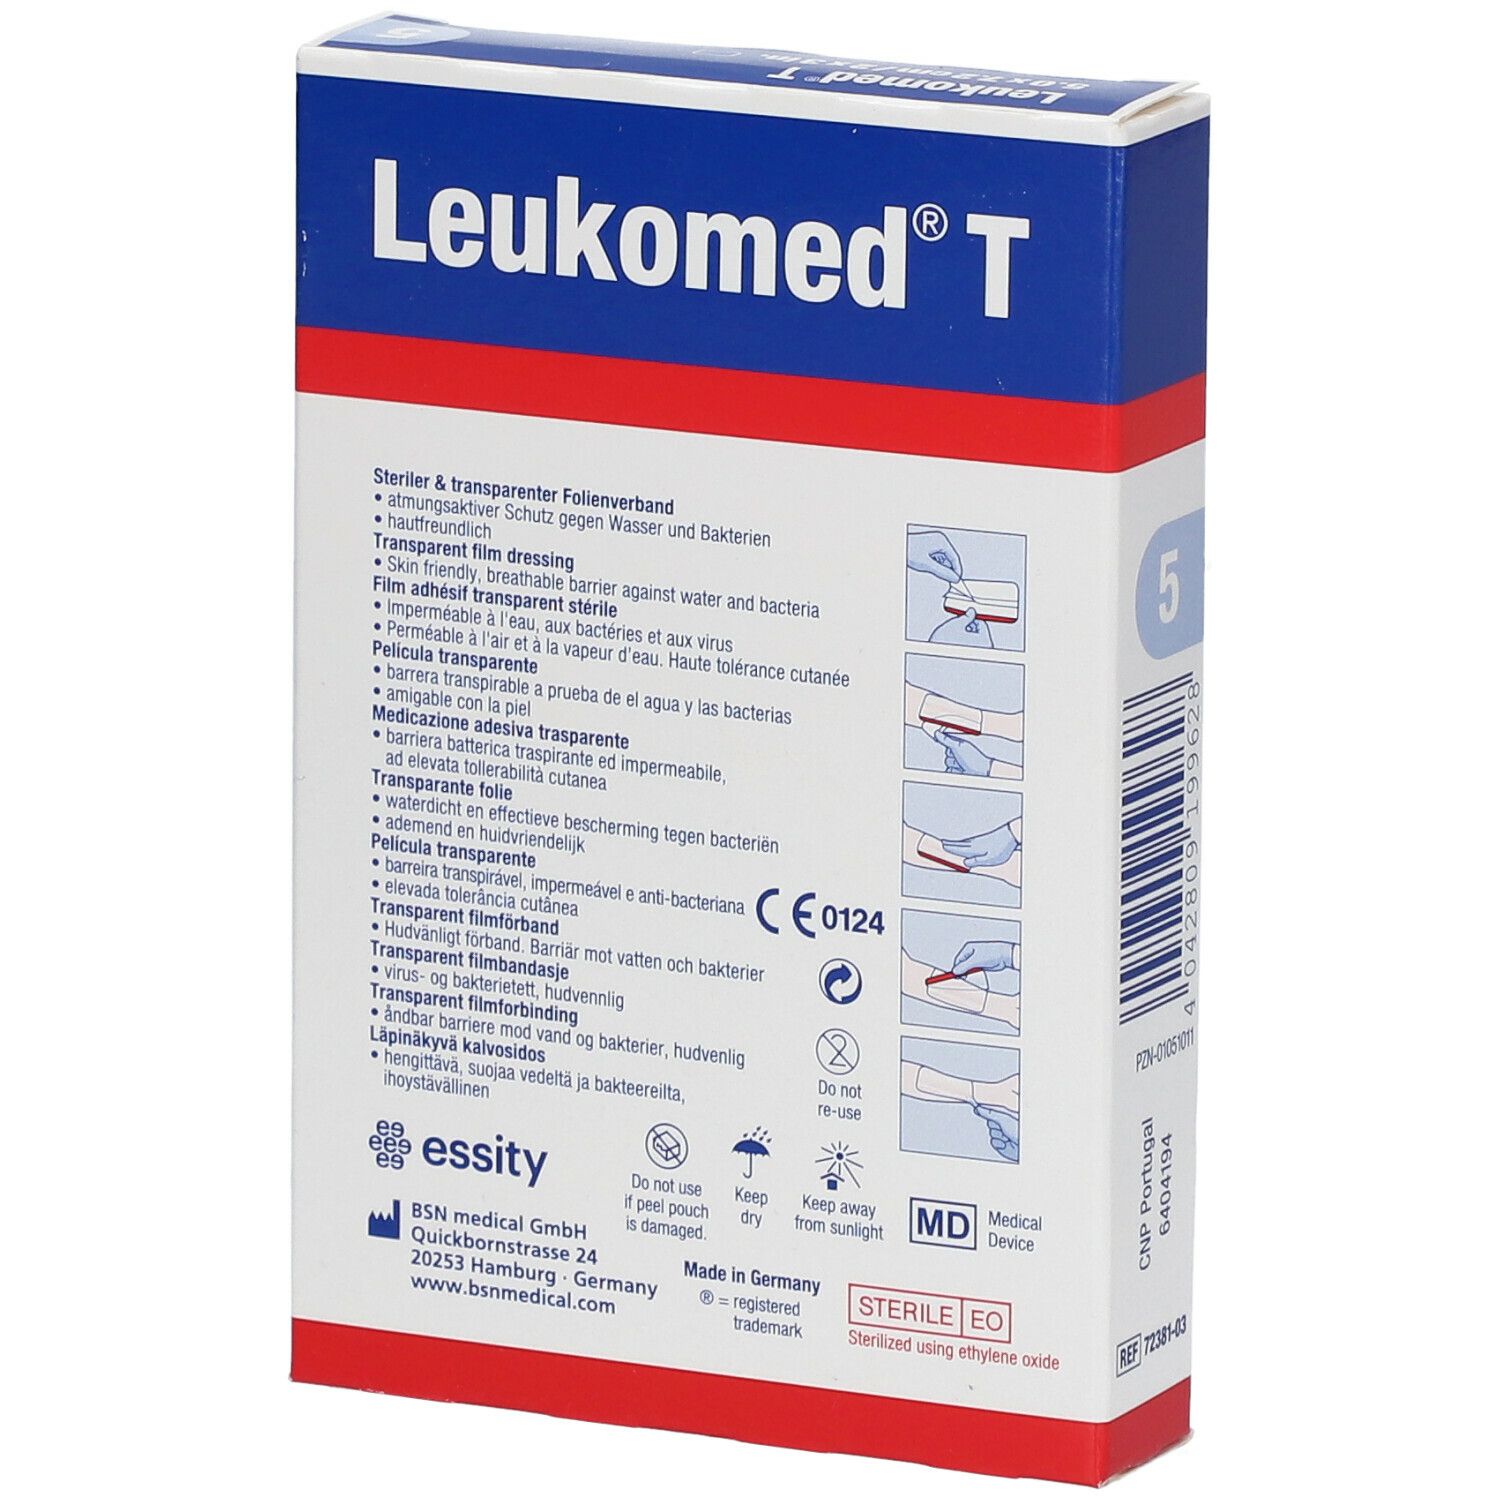 Leukomed® T 5 cm x 7,2 cm steril